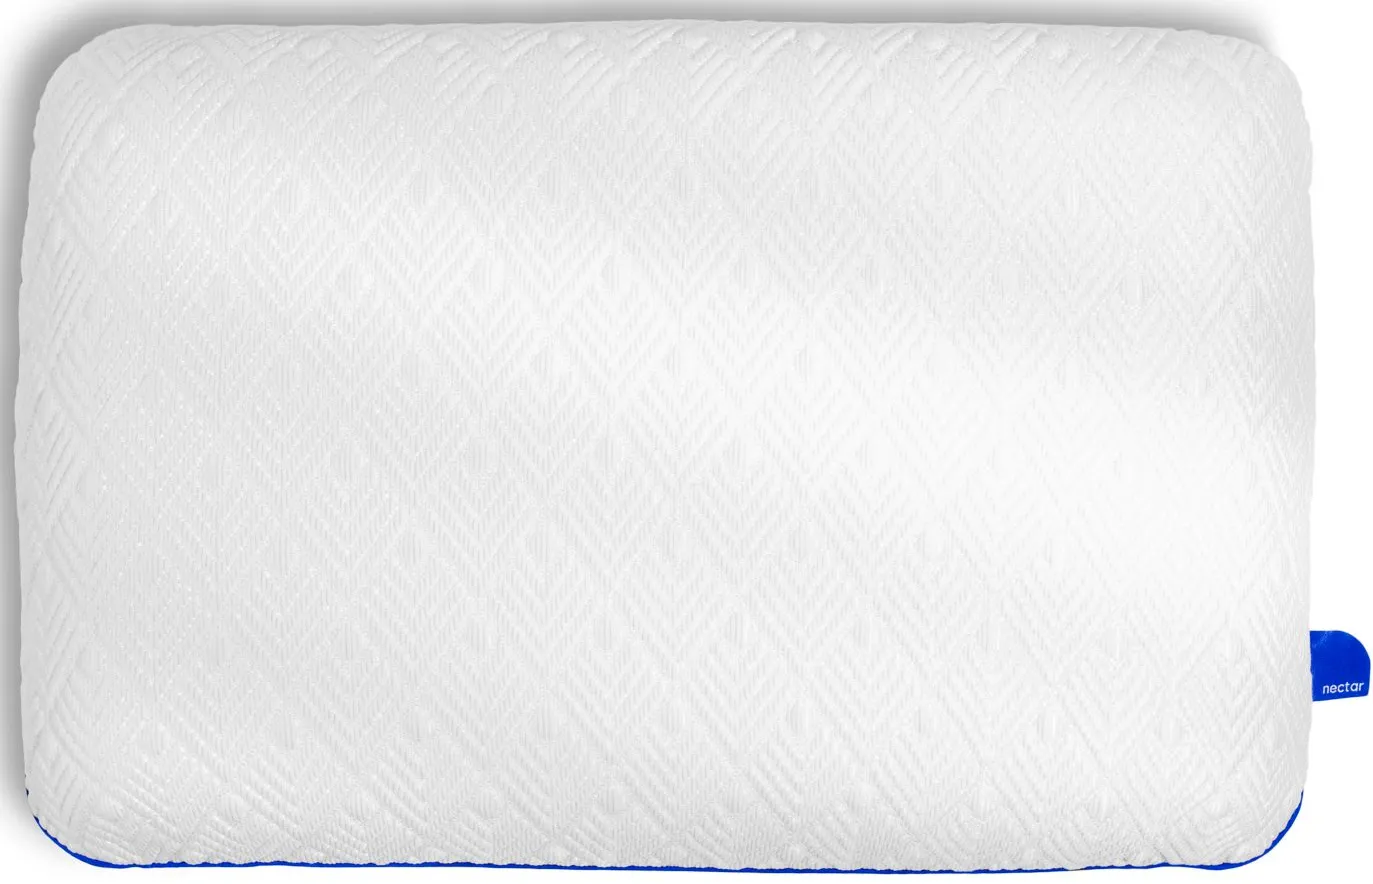 Nectar Lush Standard Pillow in White by Nectar Brand